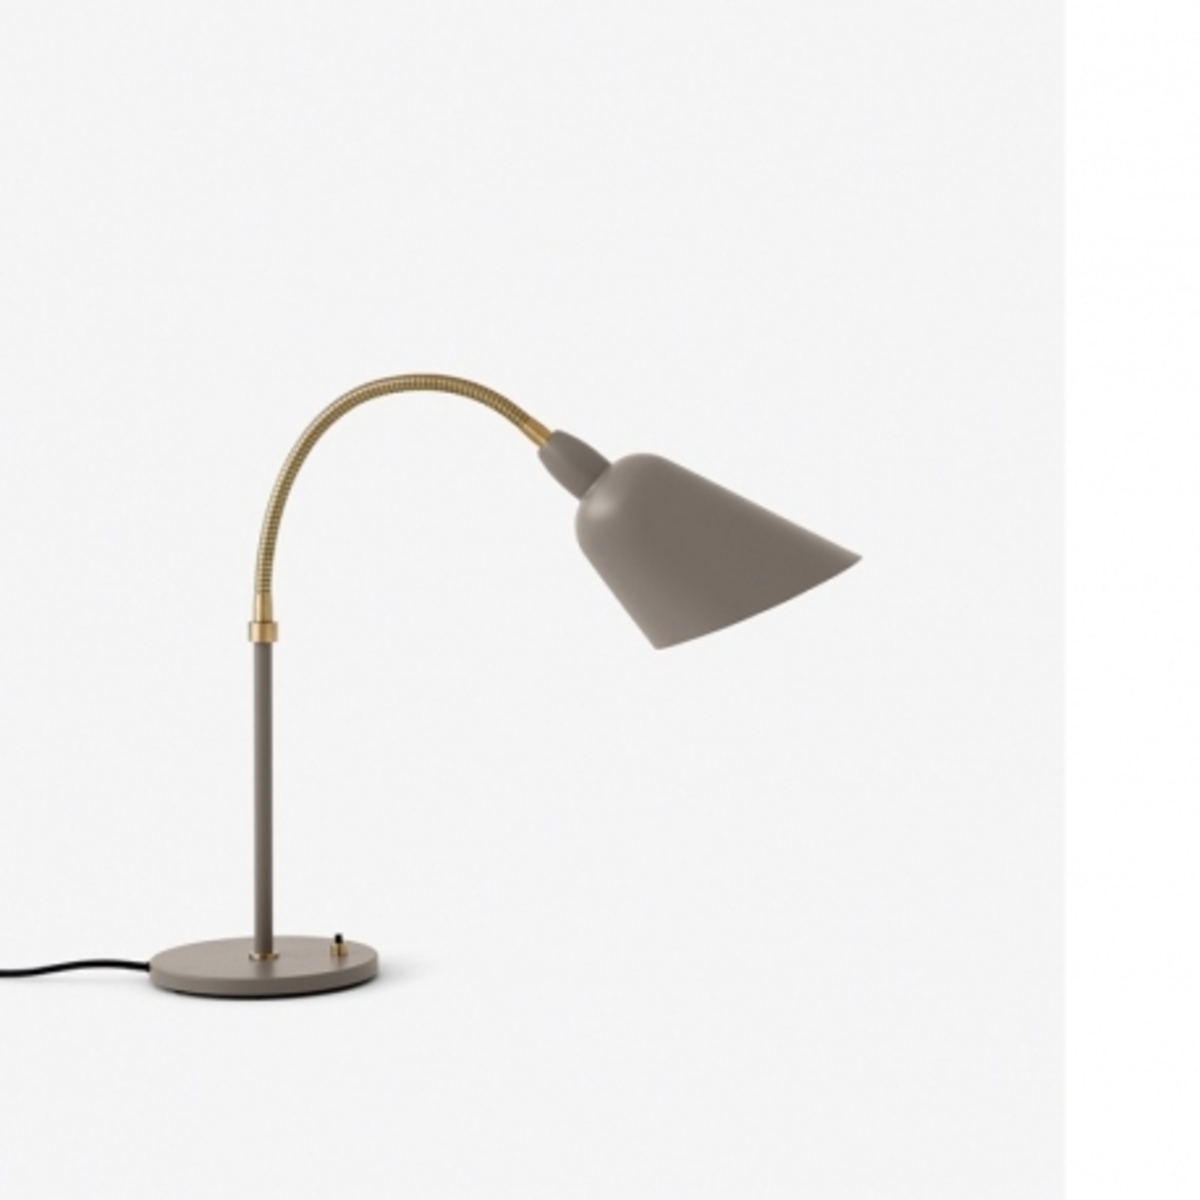 Lampe design scandinave Bellevue AJ8 H42 cm - Gris beige